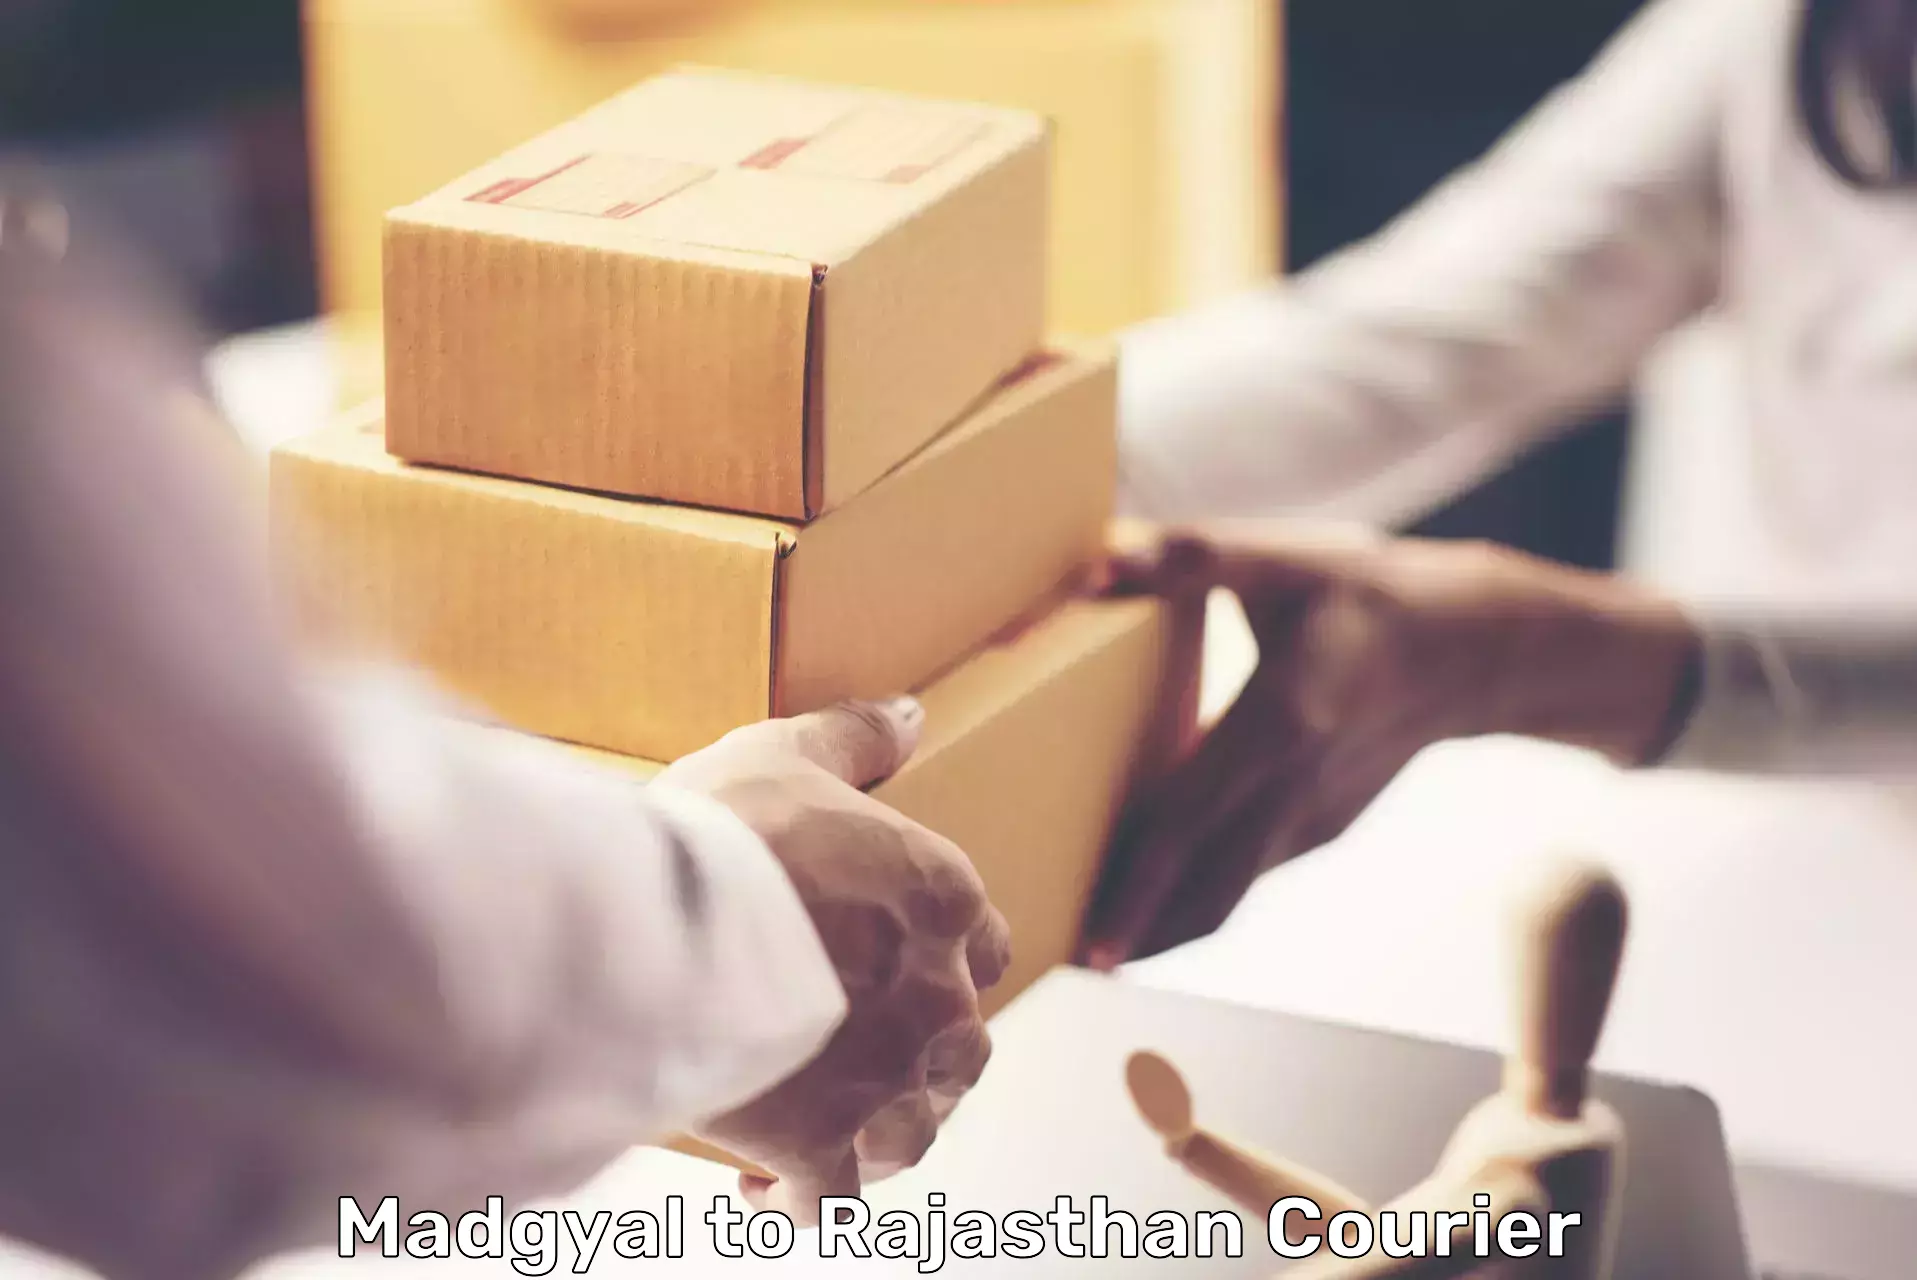 Efficient parcel service in Madgyal to Pokhran